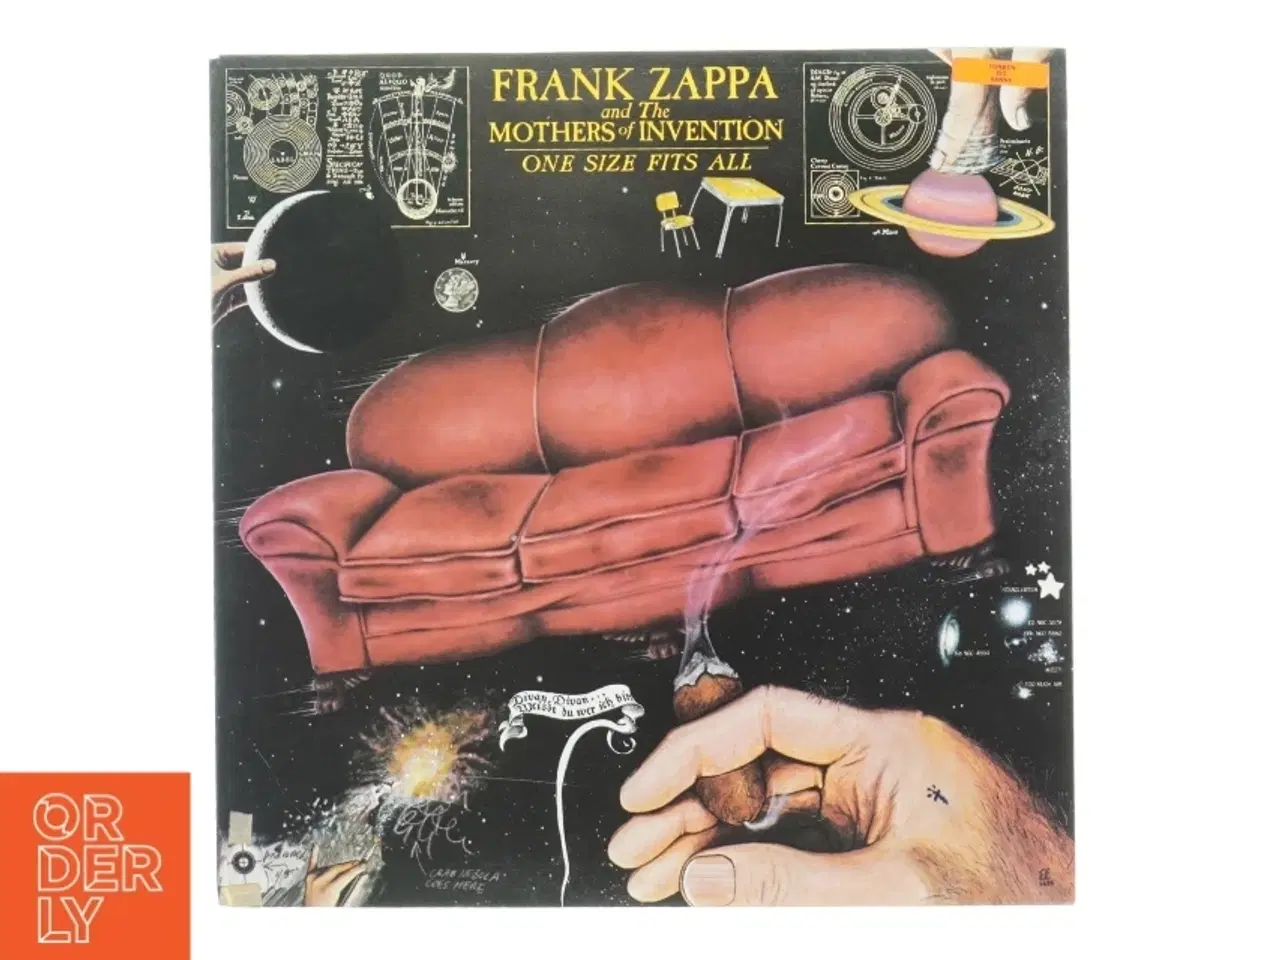 Billede 1 - Frank Zappa - One Size Fits All (LP) fra Discreet (str. 31 x 31 cm)